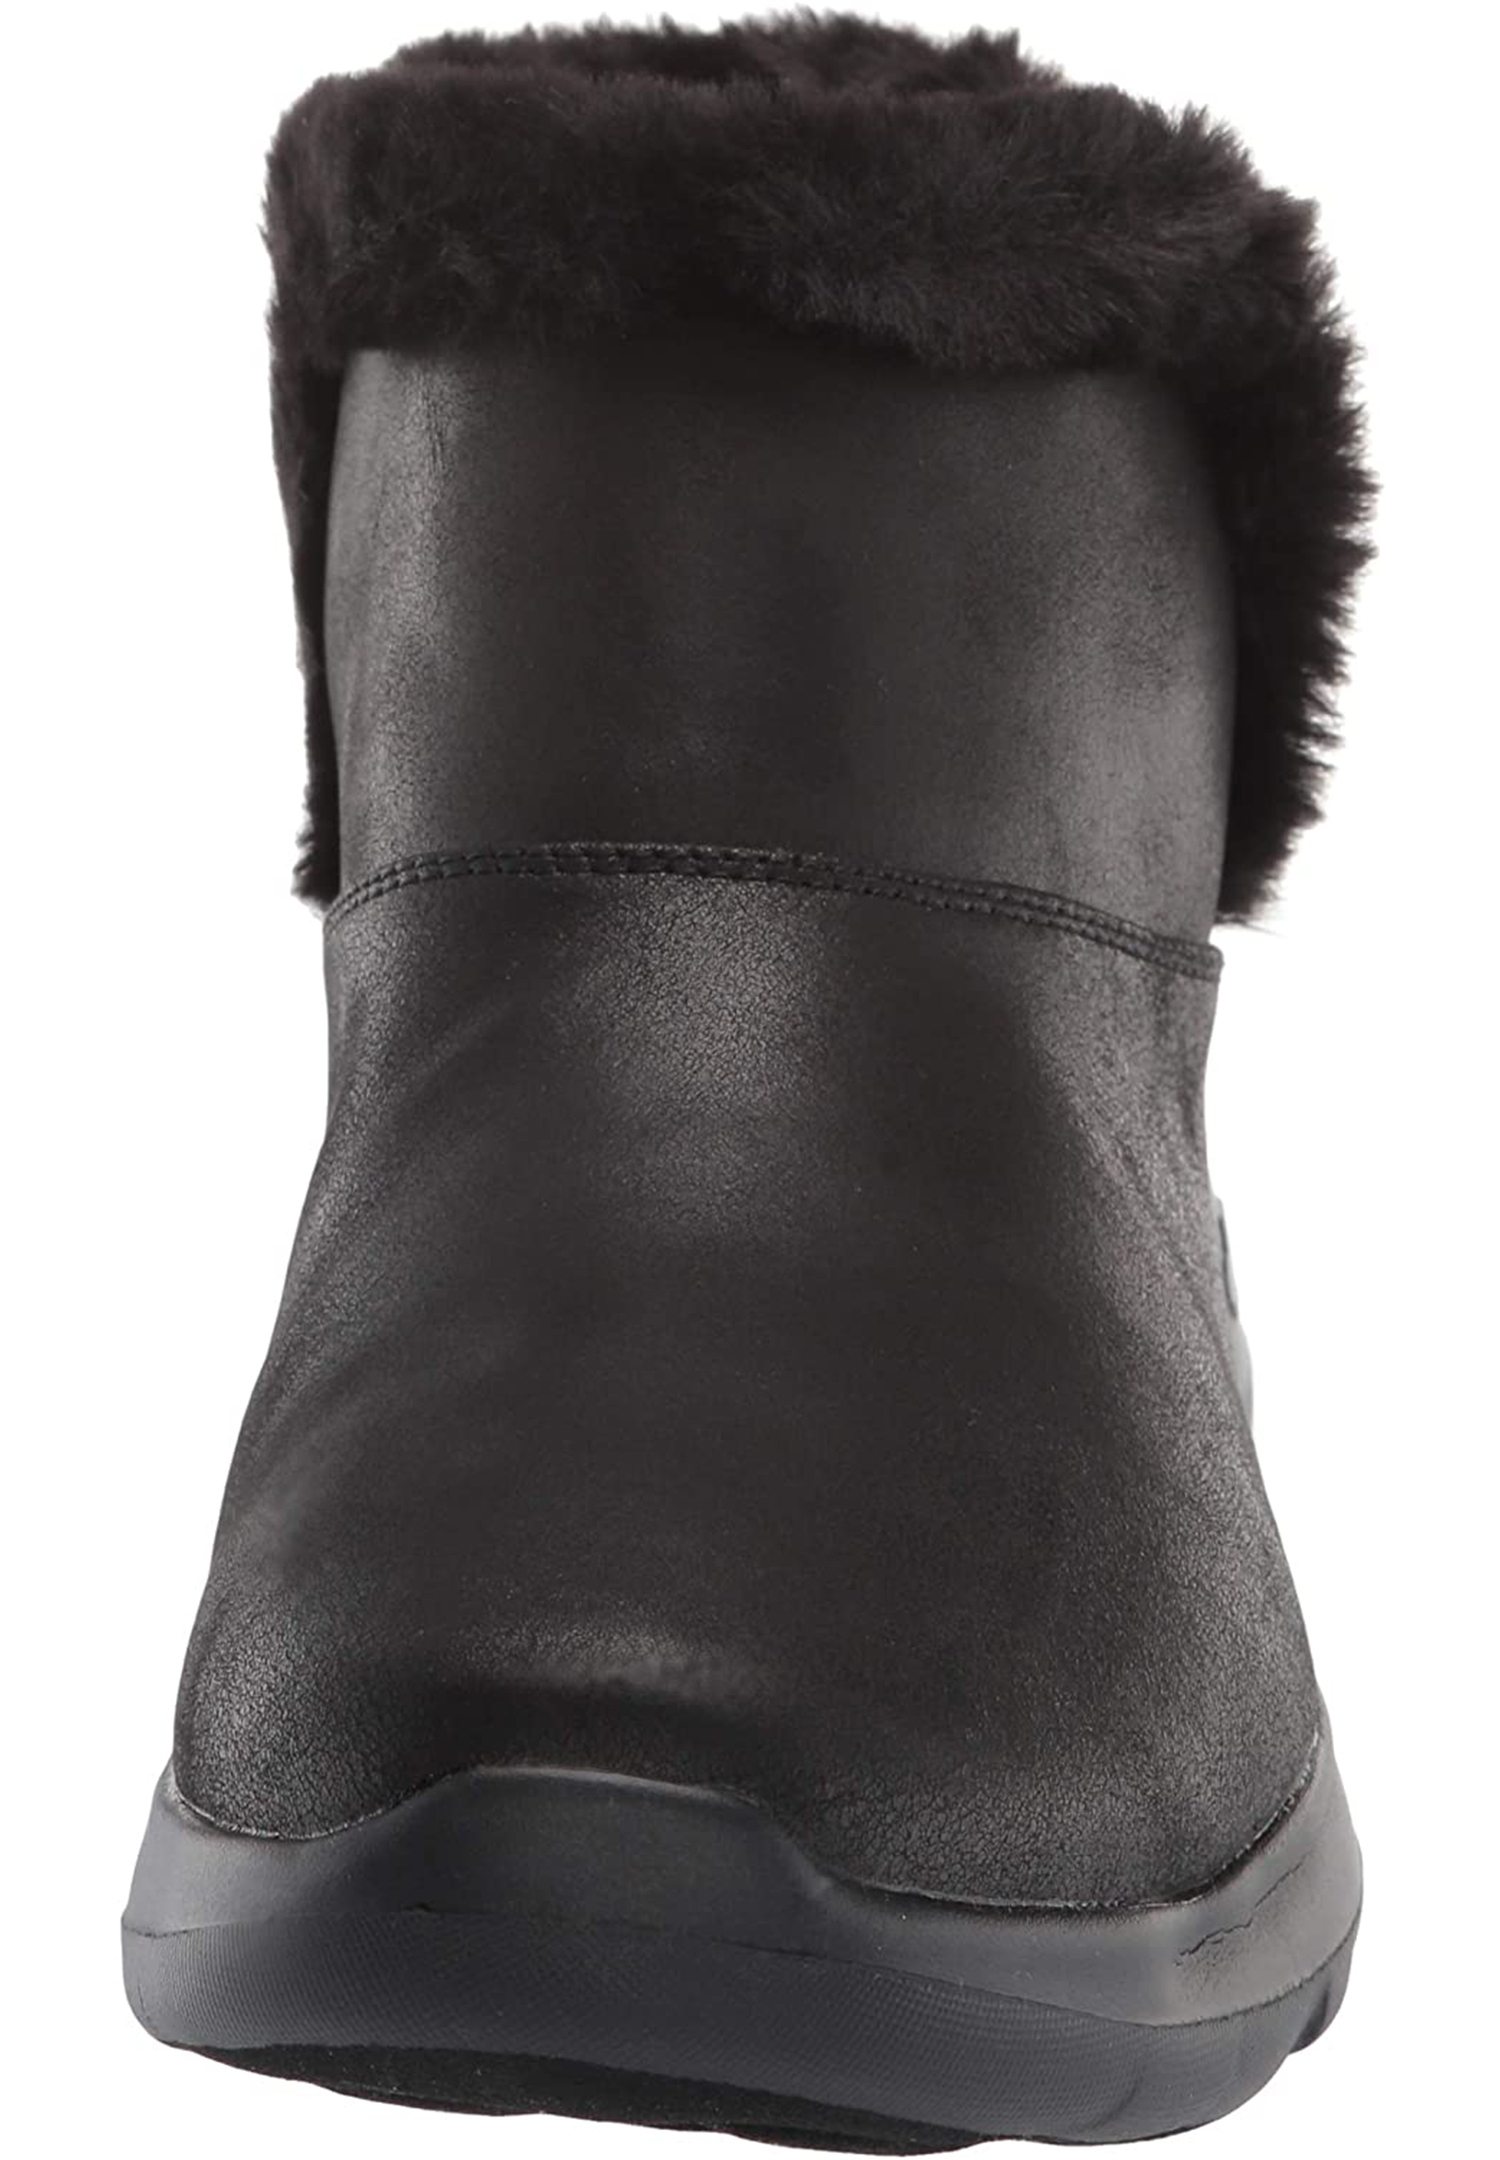 Skechers O-T-G Womens Boots ON-THE-GO JOY ENDEAVOR Stiefel Damen 144013 BBK schwarz